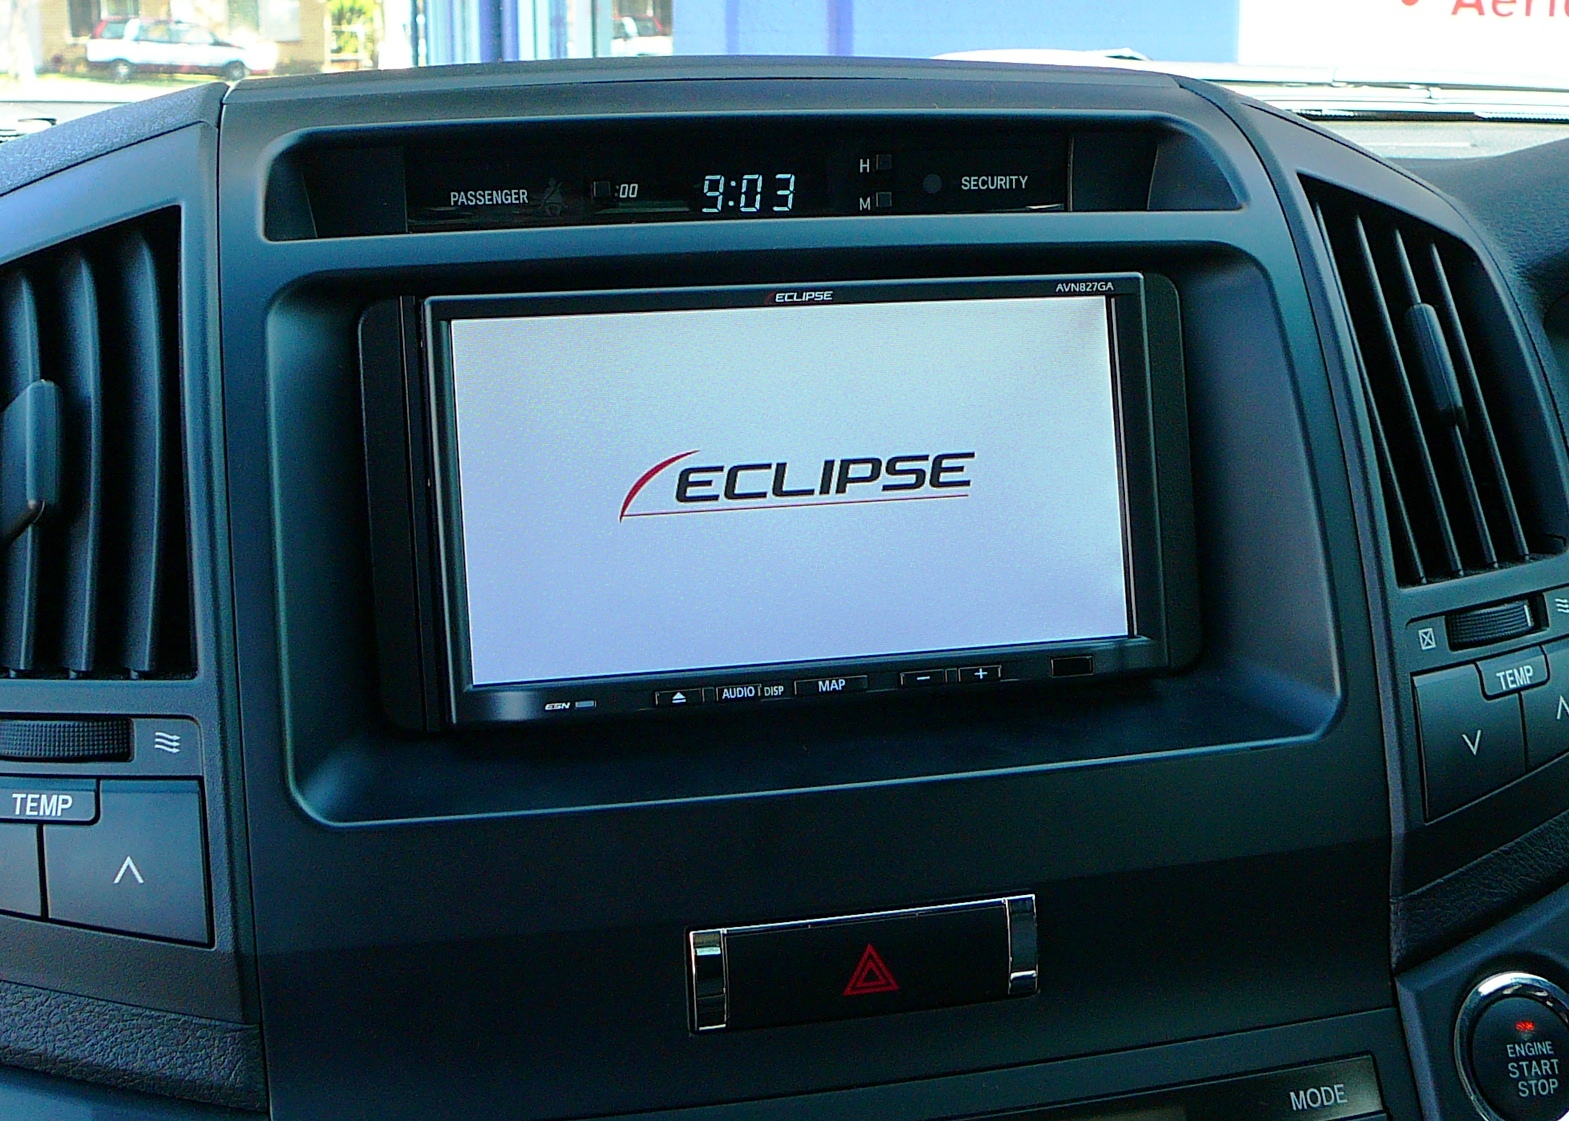 Toyota Landcruiser 200 Series, Eclipse GPS Navigation